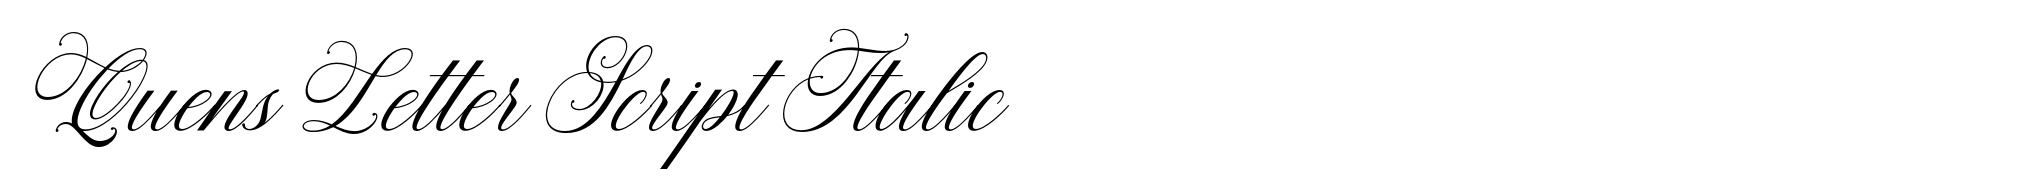 Quens Letter Script Italic image